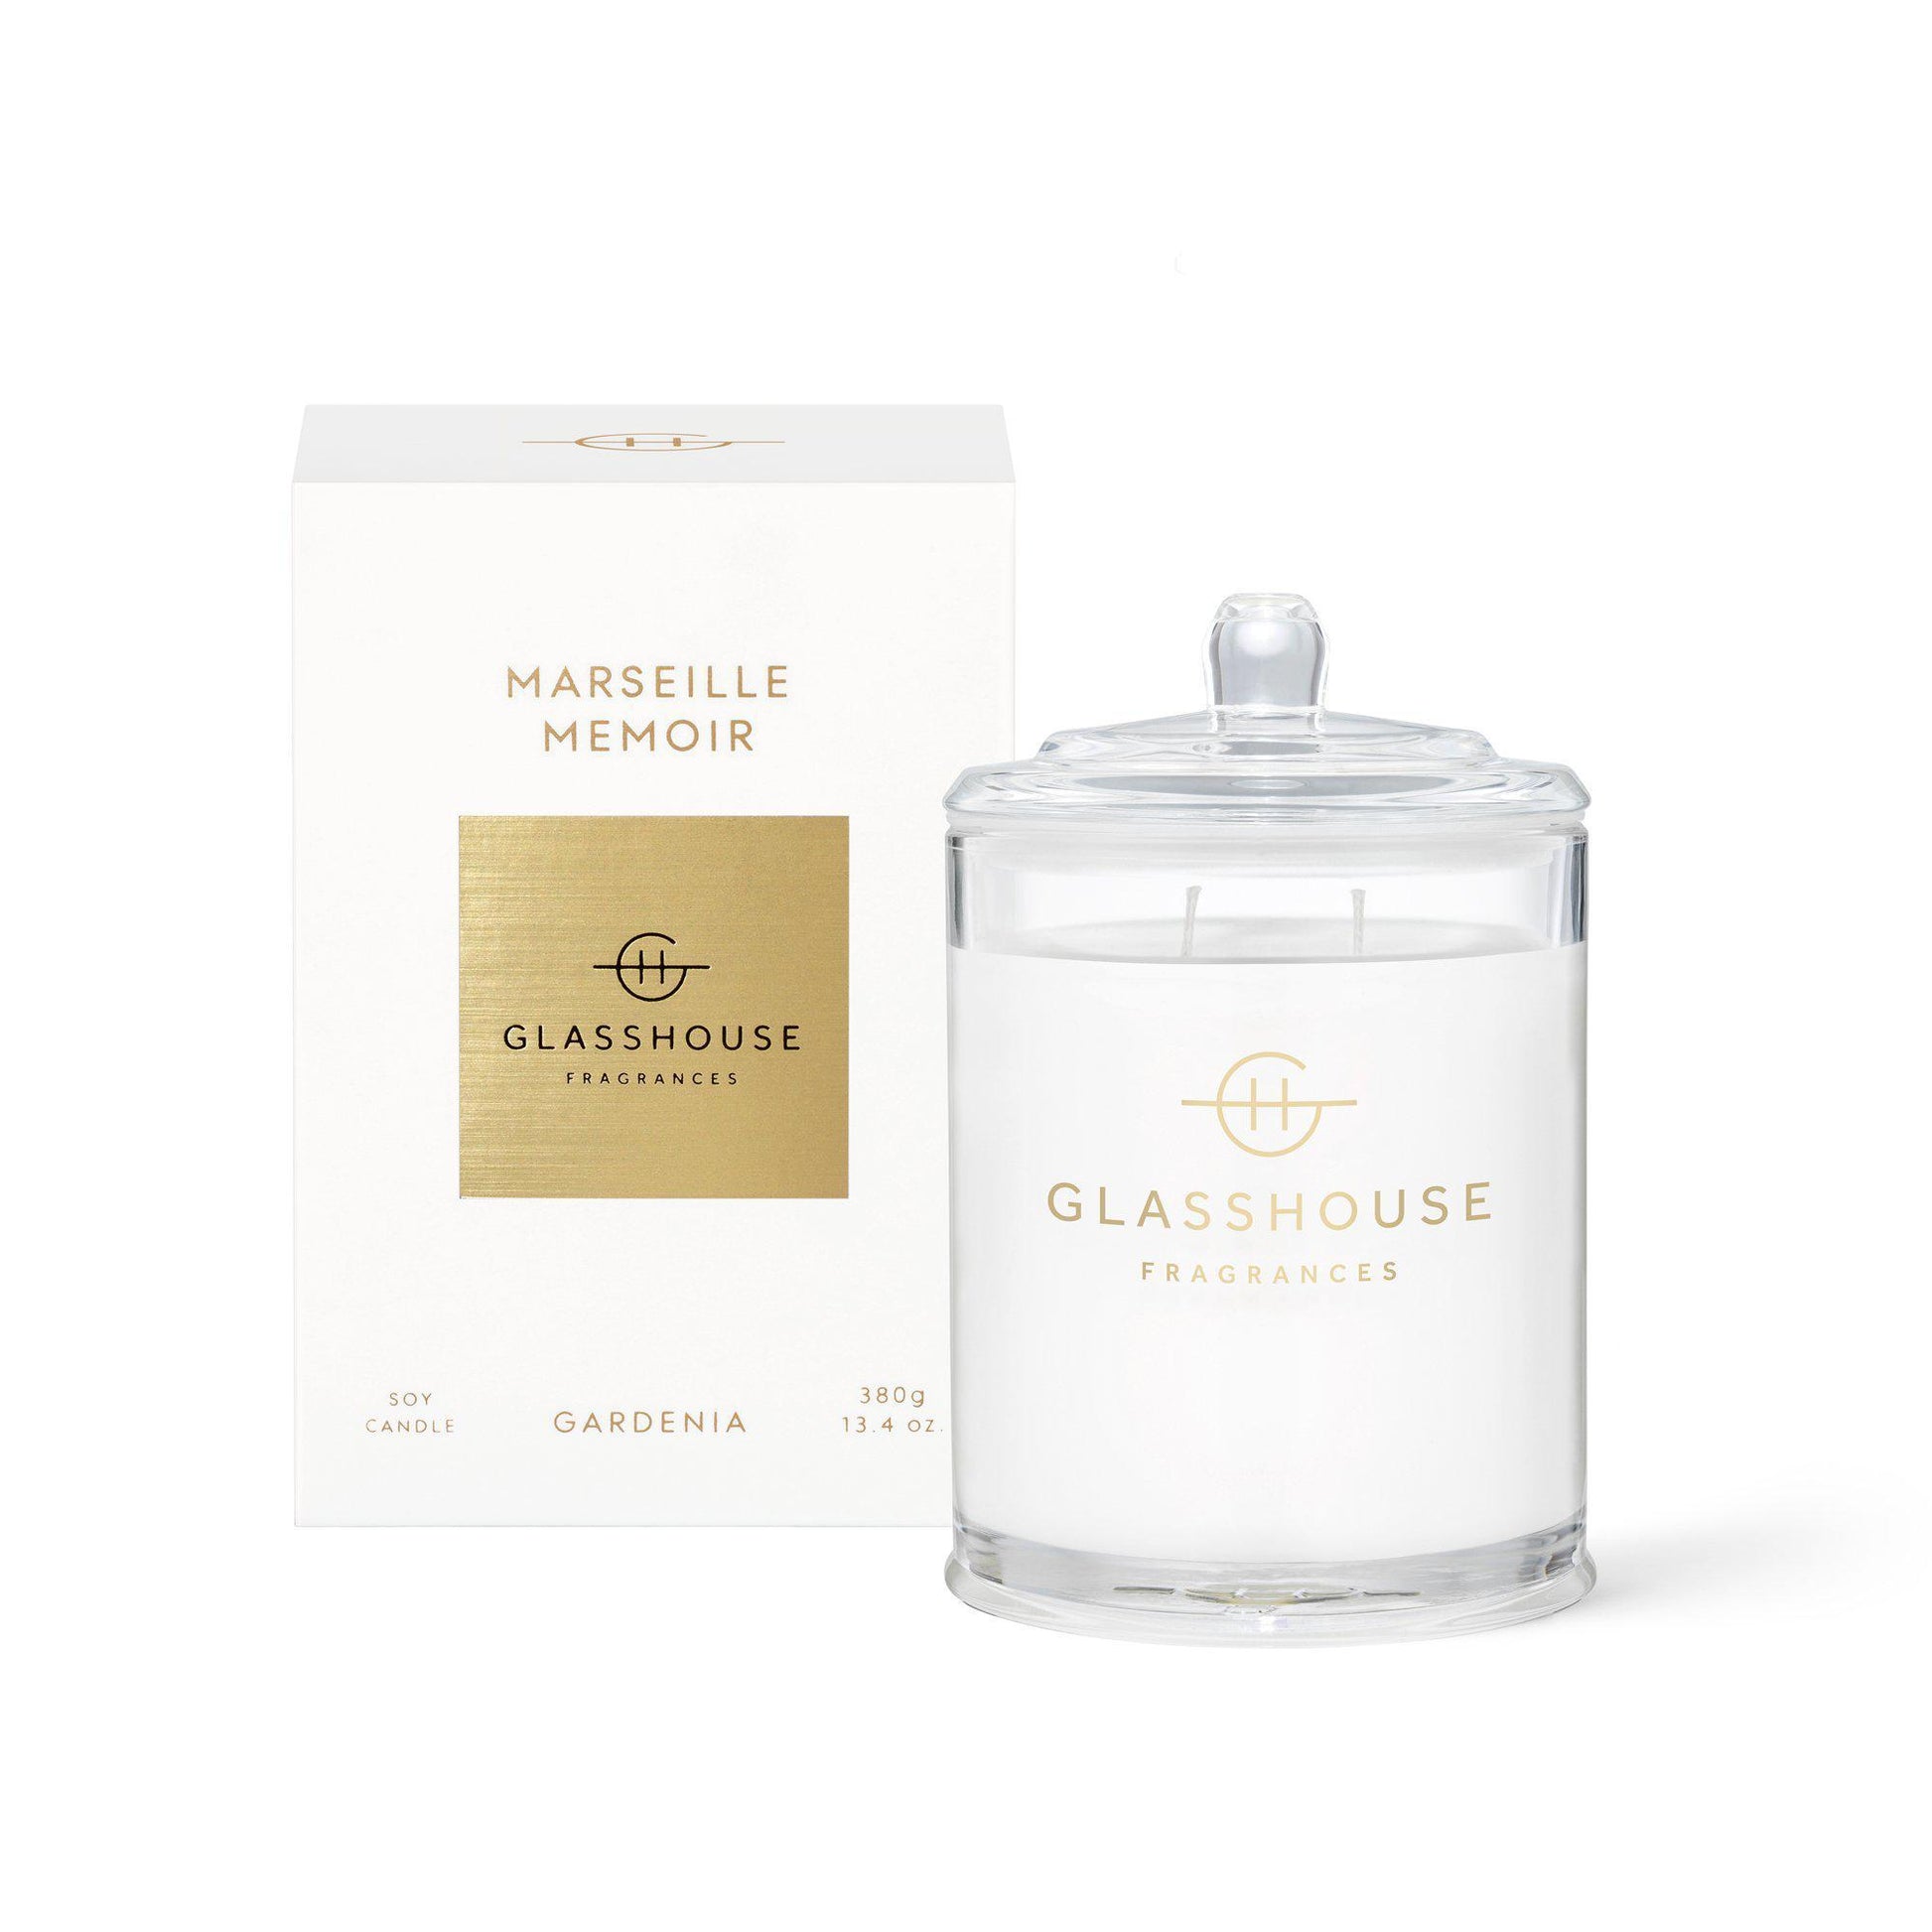 Candle 380g  - Marseille Memoir - Glasshouse Fragrances - FUDGE Gifts Home Lifestyle